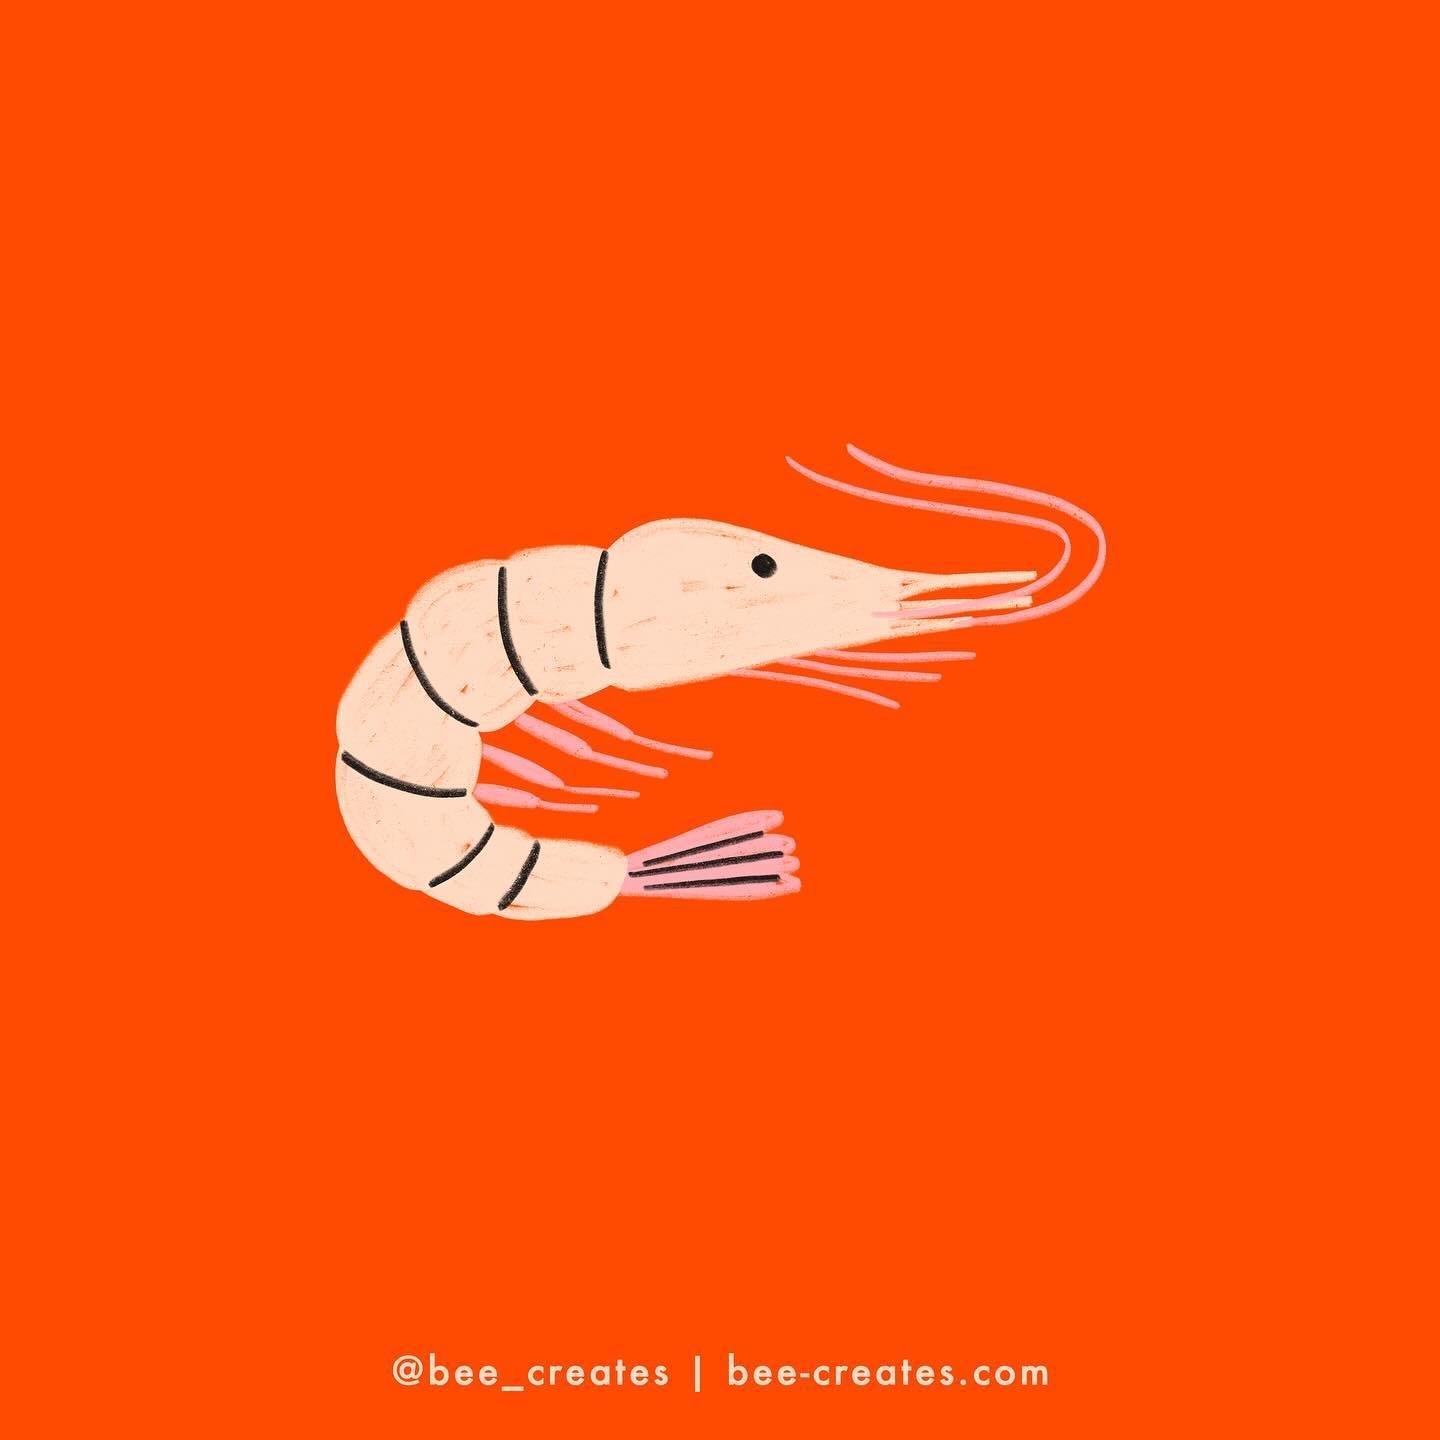 SHRIMP 12/100 for #100daysoftastyart

#shrimp #seafood #crustacean #sealife #🦐 #🍤 #illustration #foodart #surfacedesign #surfacepatterndesign #surfacedesigner #foodillustration #theydrawandcook #theydrawanduppercase #100daychallenge #100dayproject 